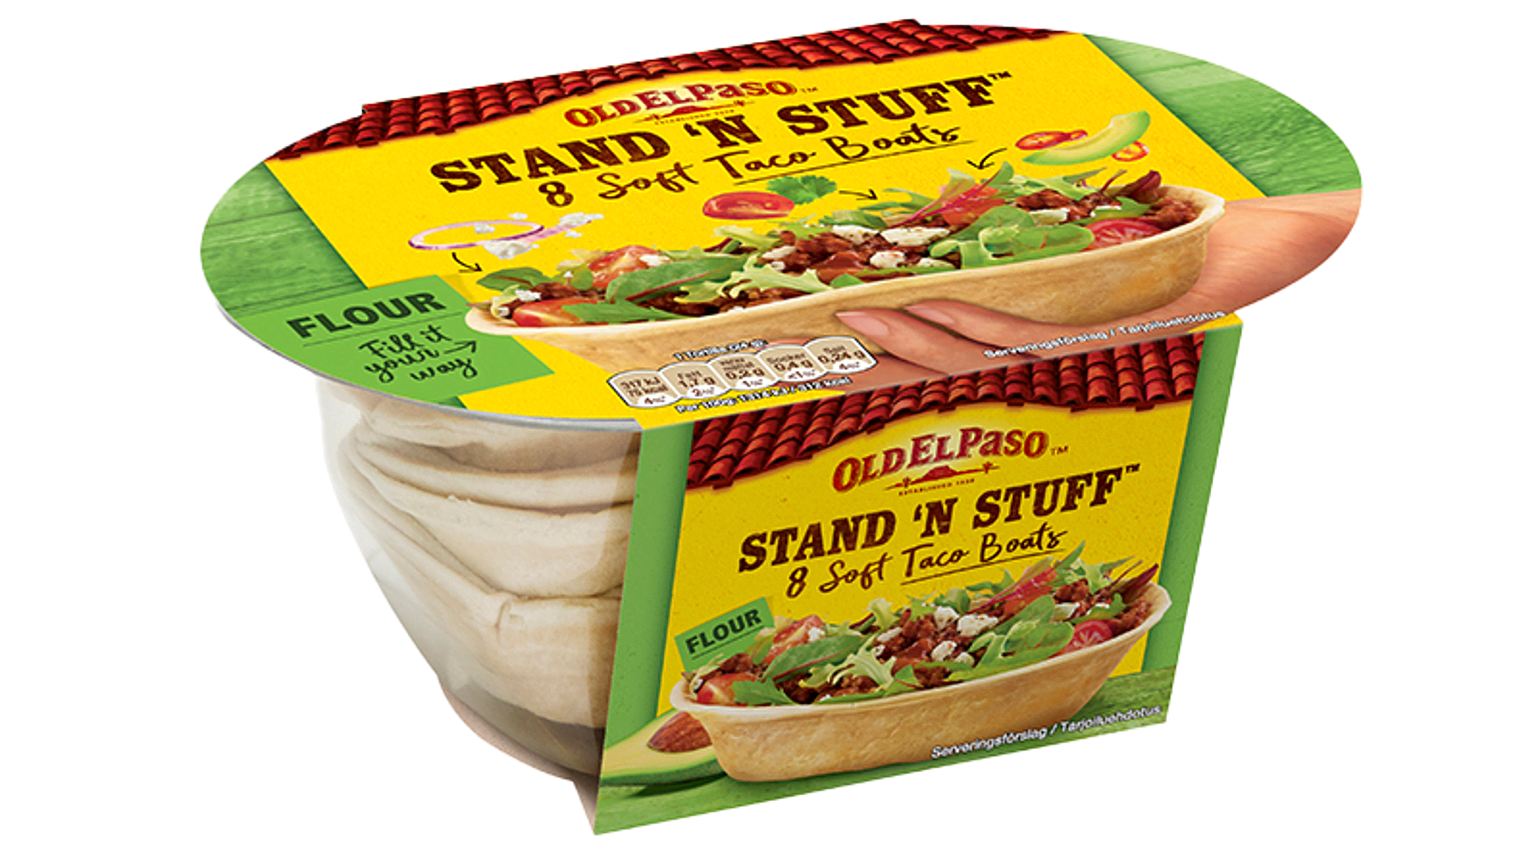 Stand 'N Stuff™ 8 Soft Taco Boat